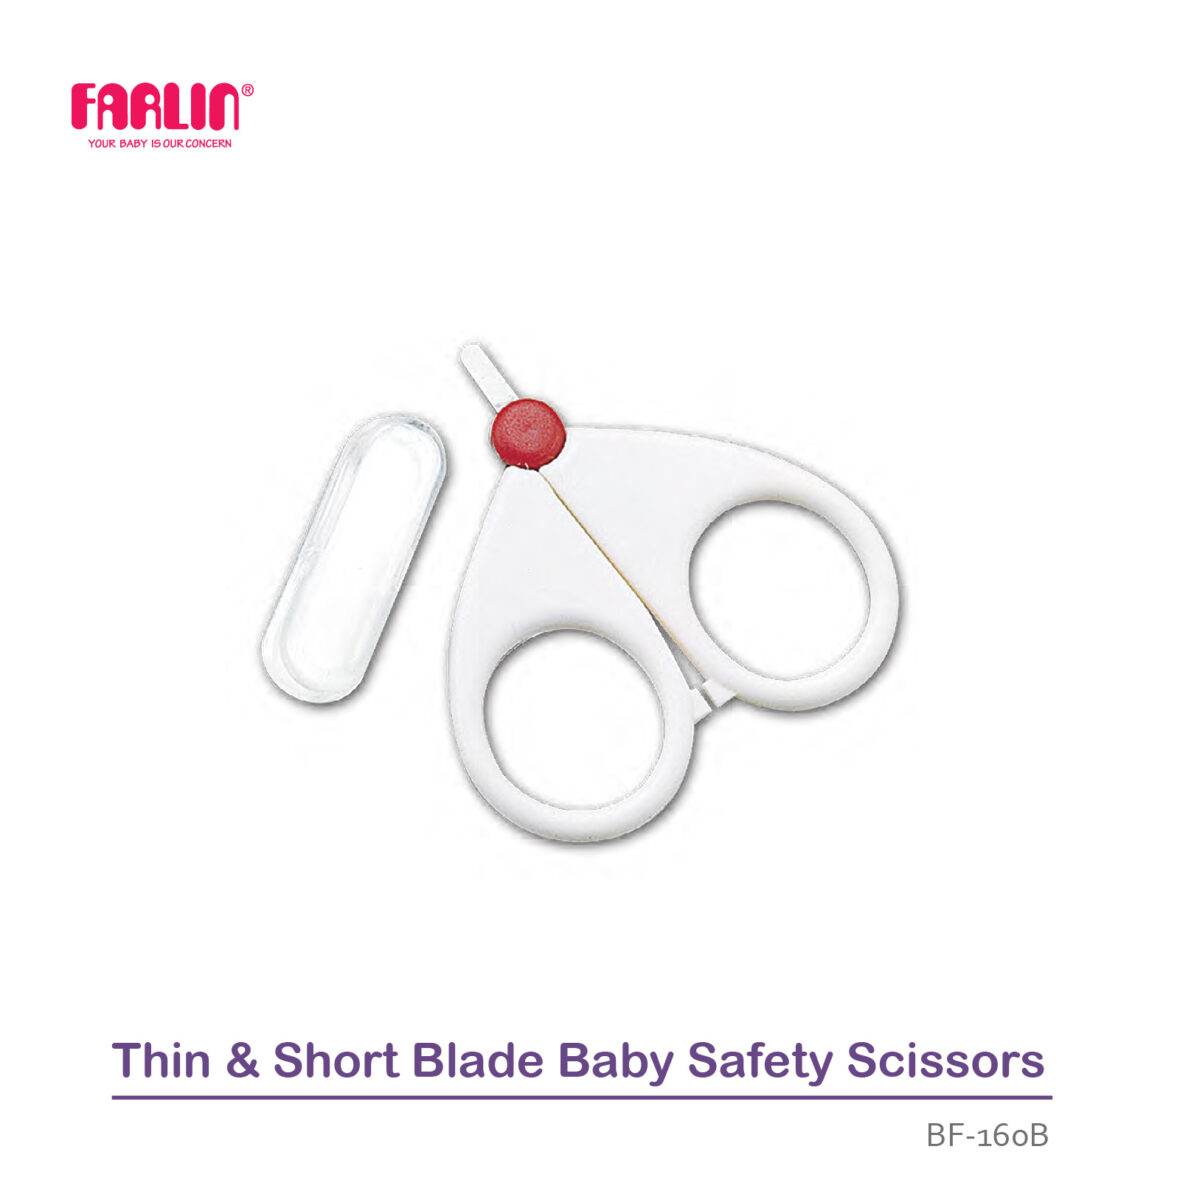 Farlin Doctor J. Baby Safety Scissors – Thin & Short Blade